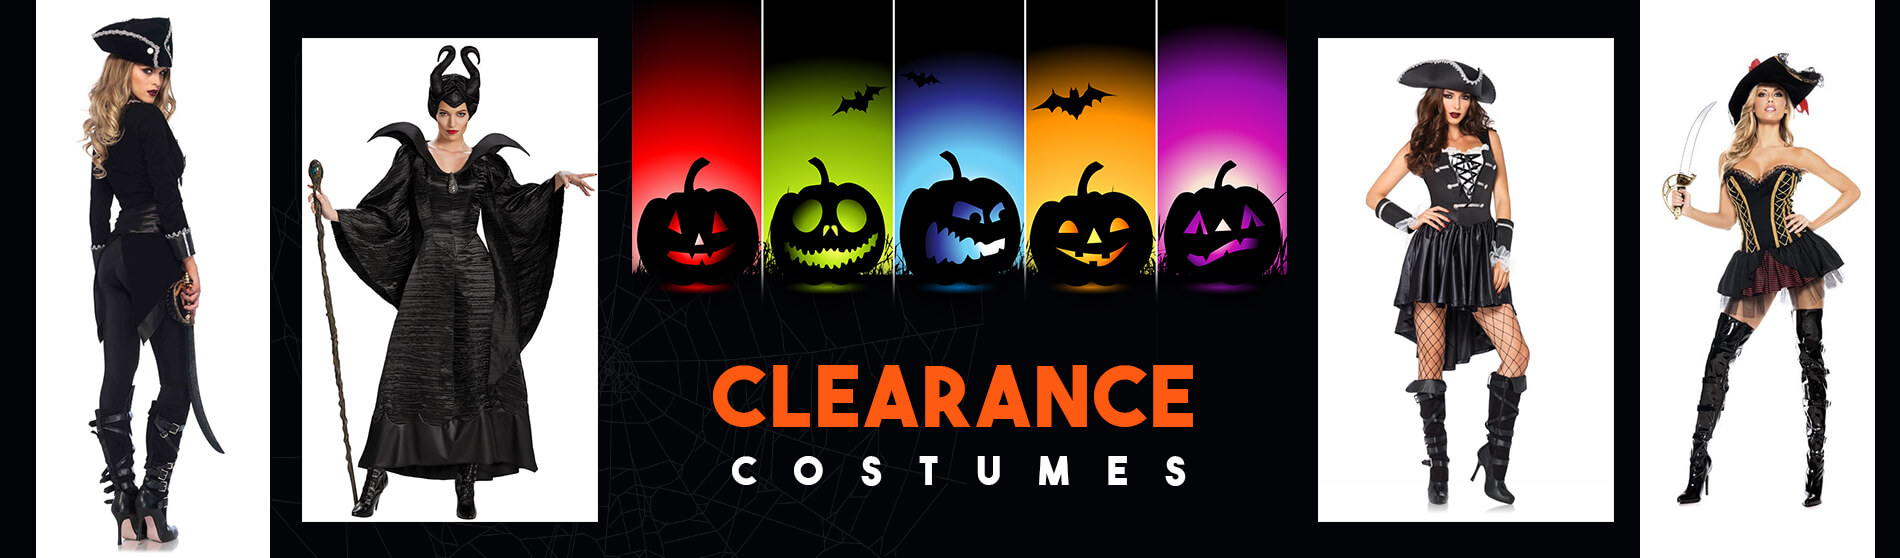 Glendale Halloween : clearance-costumes